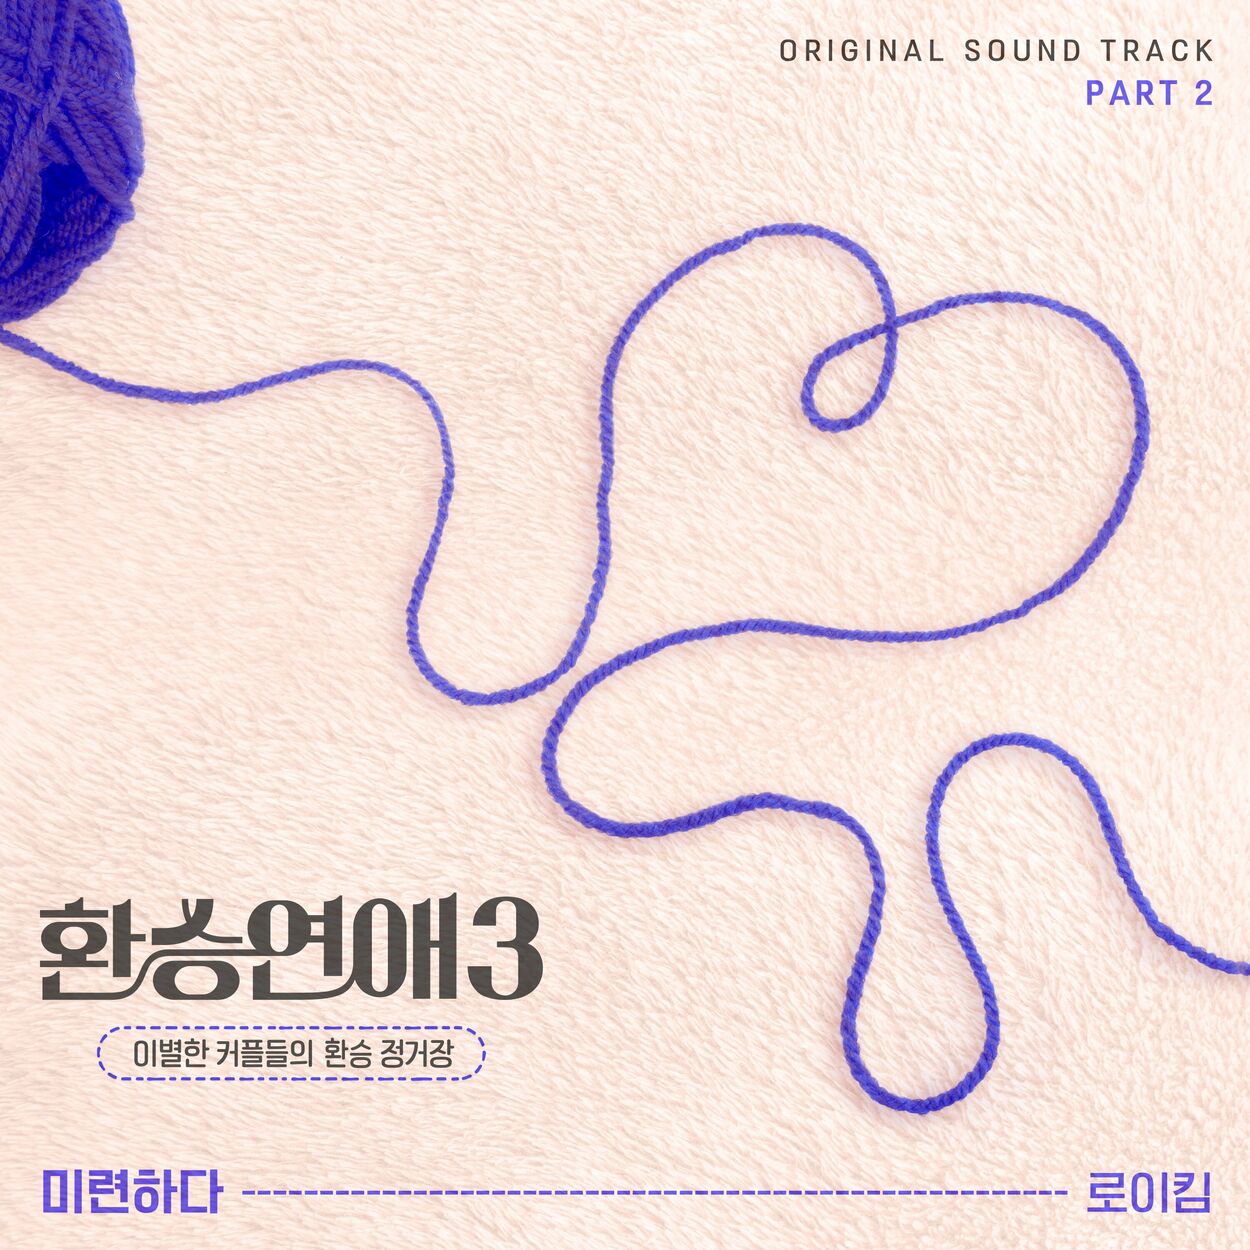 Roy Kim – EXchange3 OST Part.2